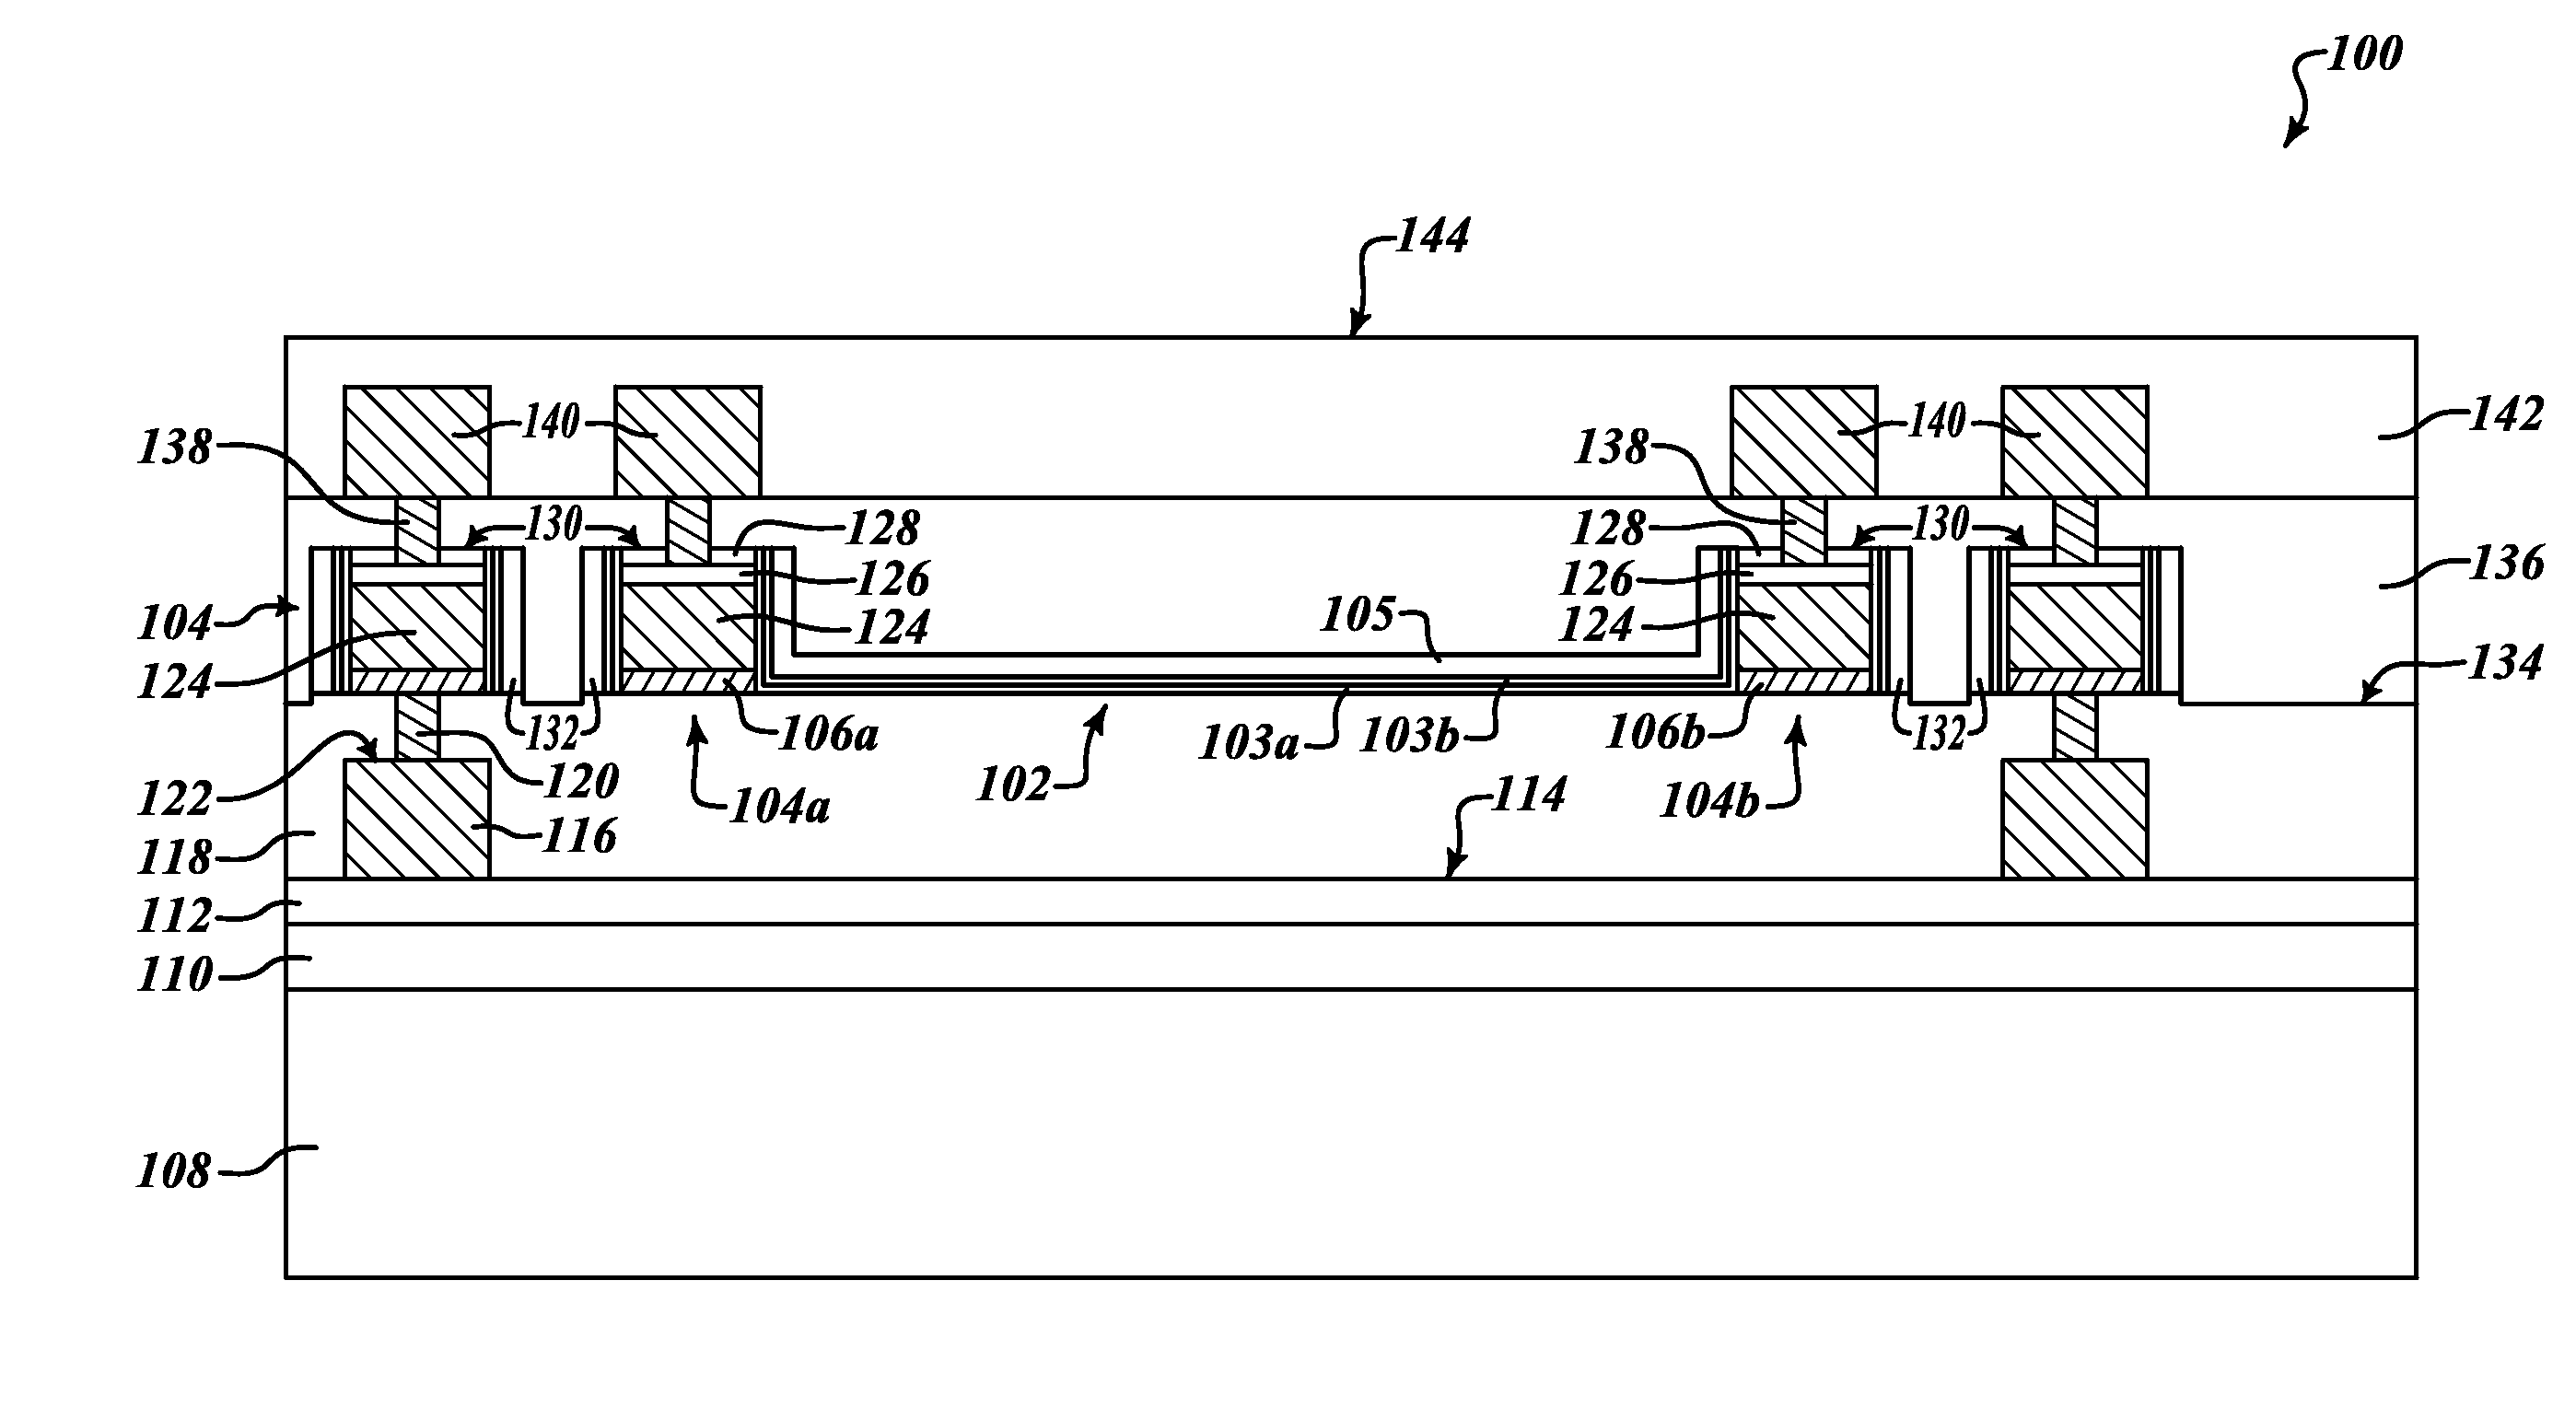 Multi-layer via-less thin film resistor